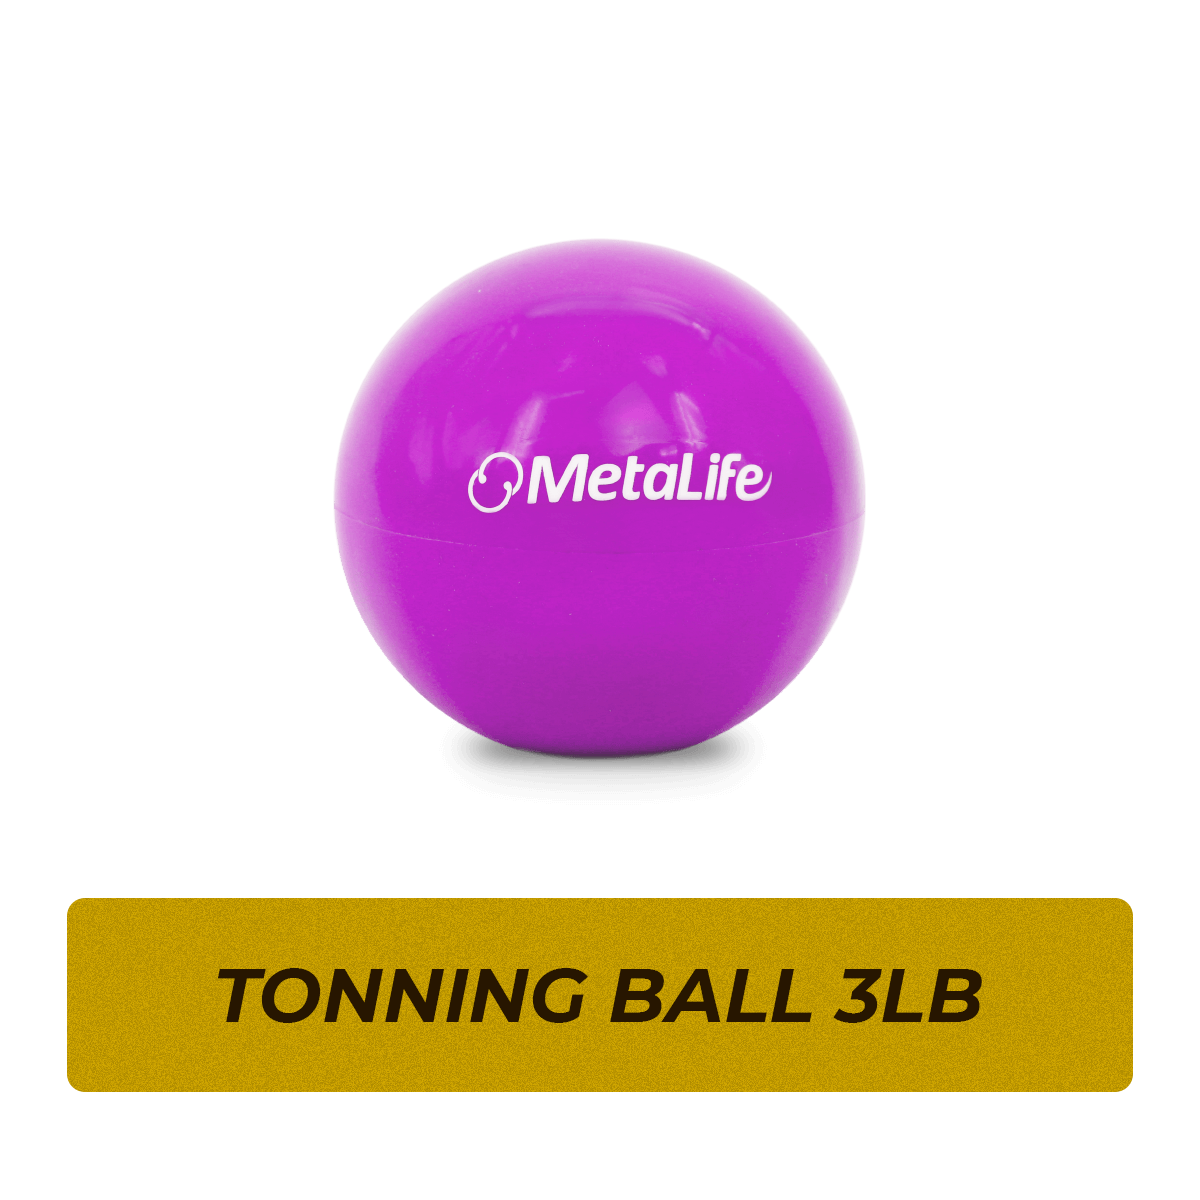 Tonning Ball 3LB